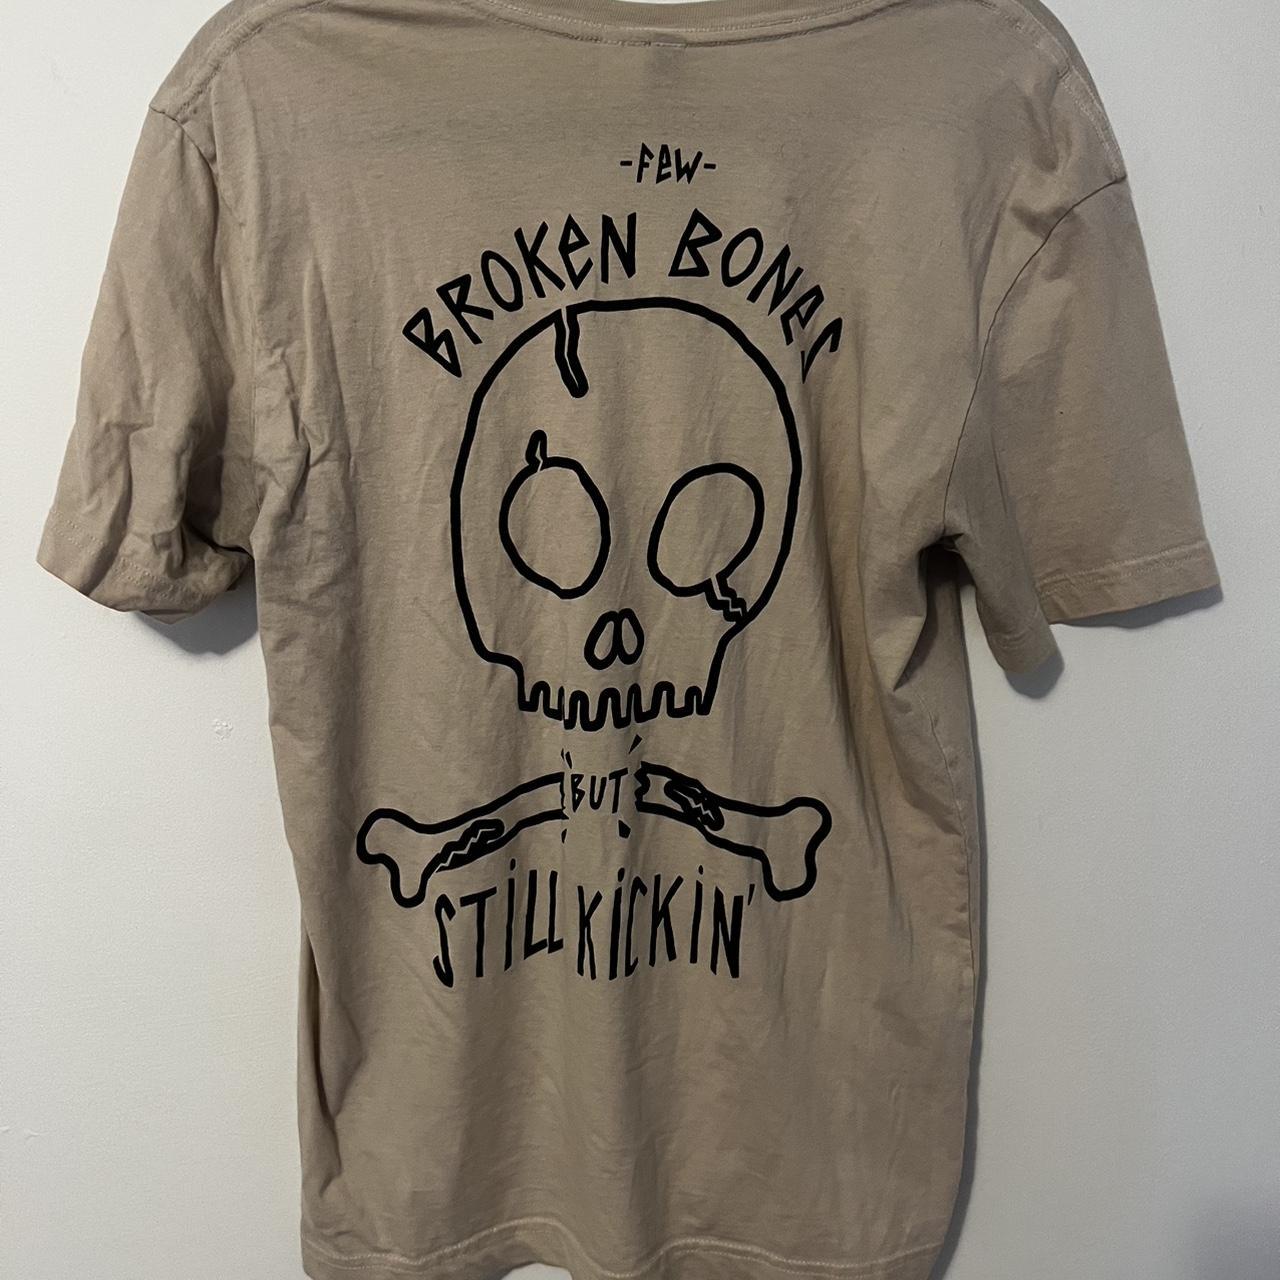 Psycho Bunny Men's Tan and Black T-shirt (2)